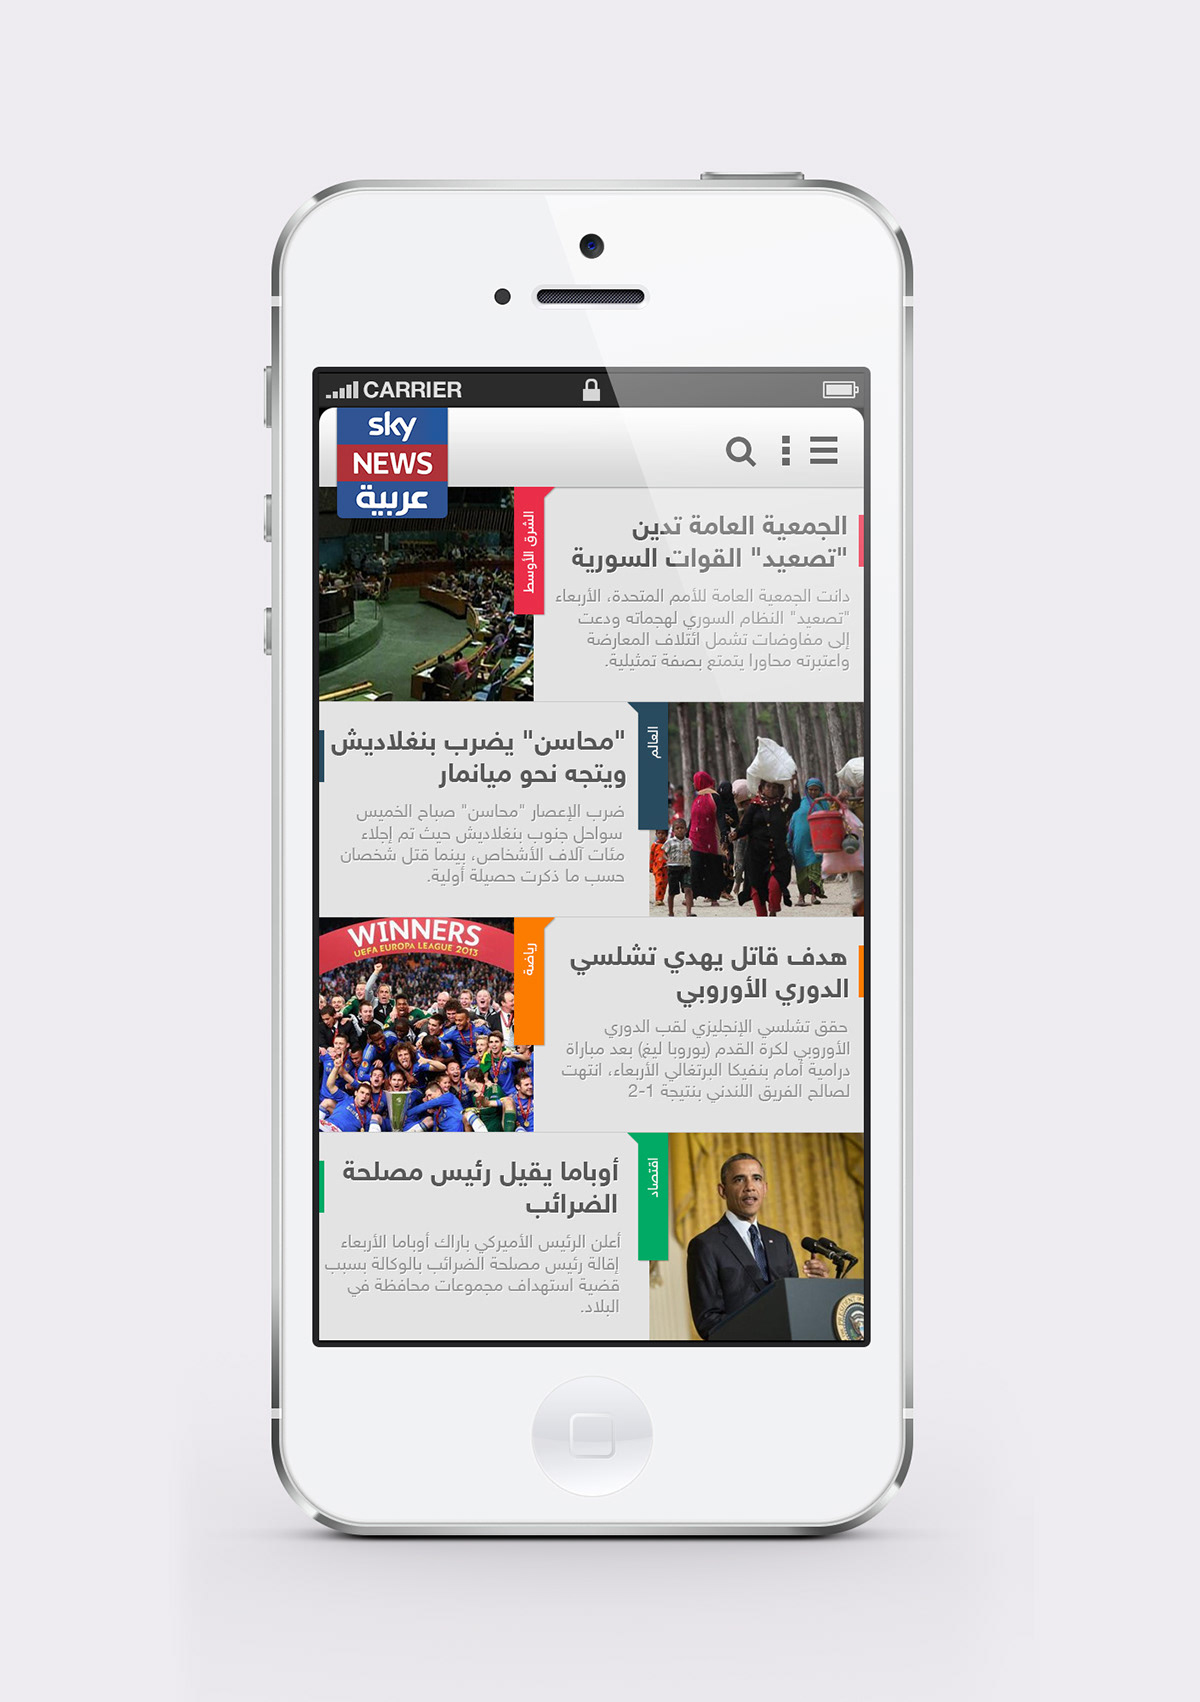 Sky News Arabia Mobile app